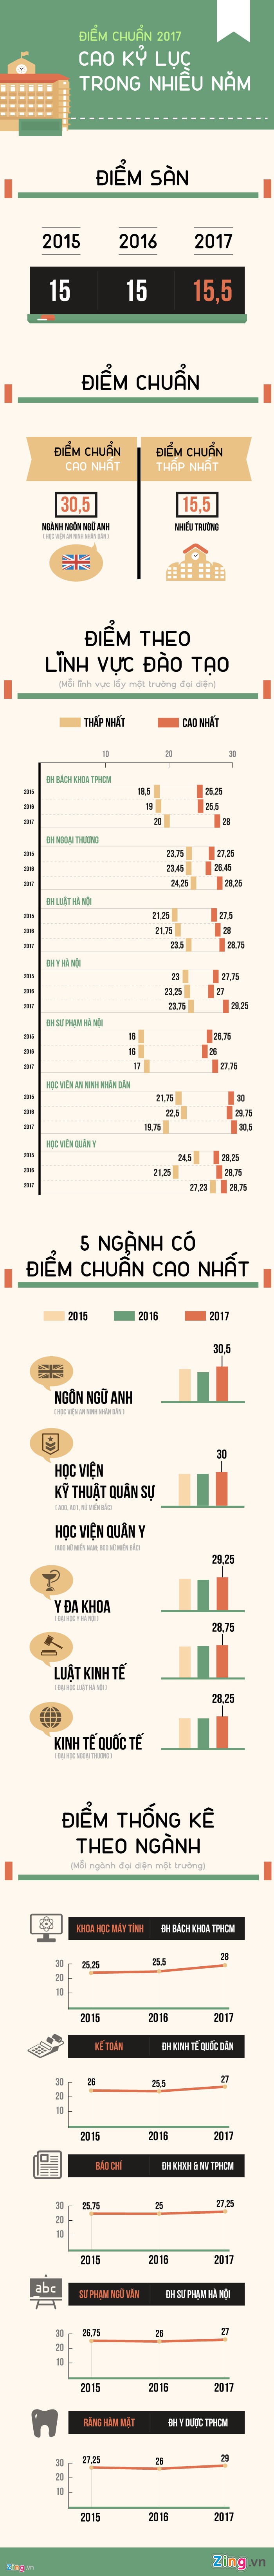 Diem chuan dai hoc 2017 cao ky luc trong nhieu nam